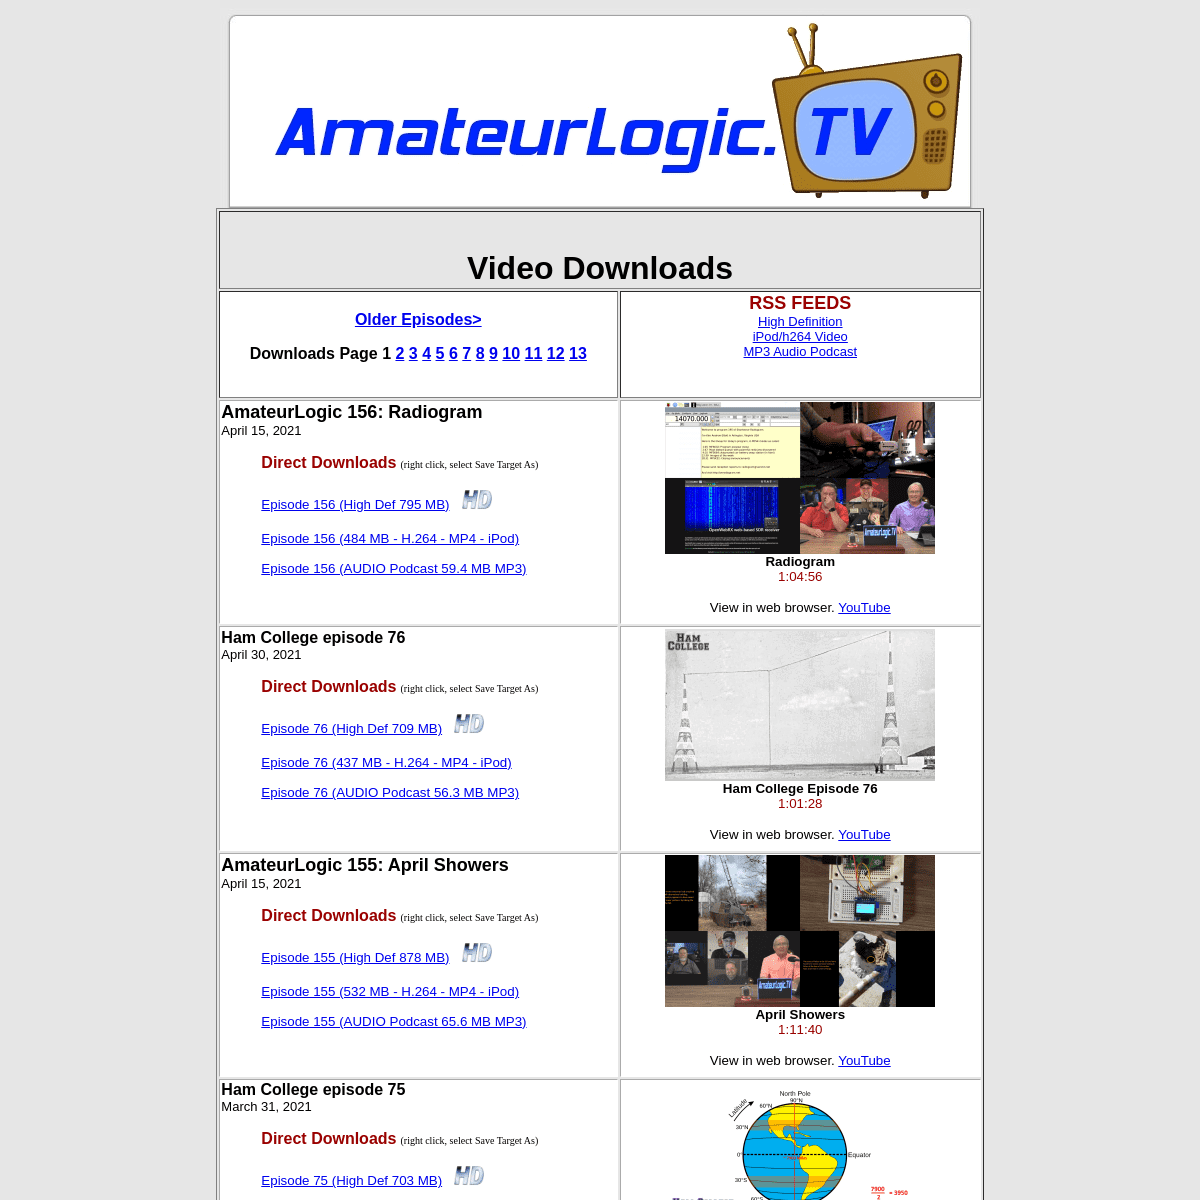 A complete backup of http://www.amateurlogic.com/downloads.htm